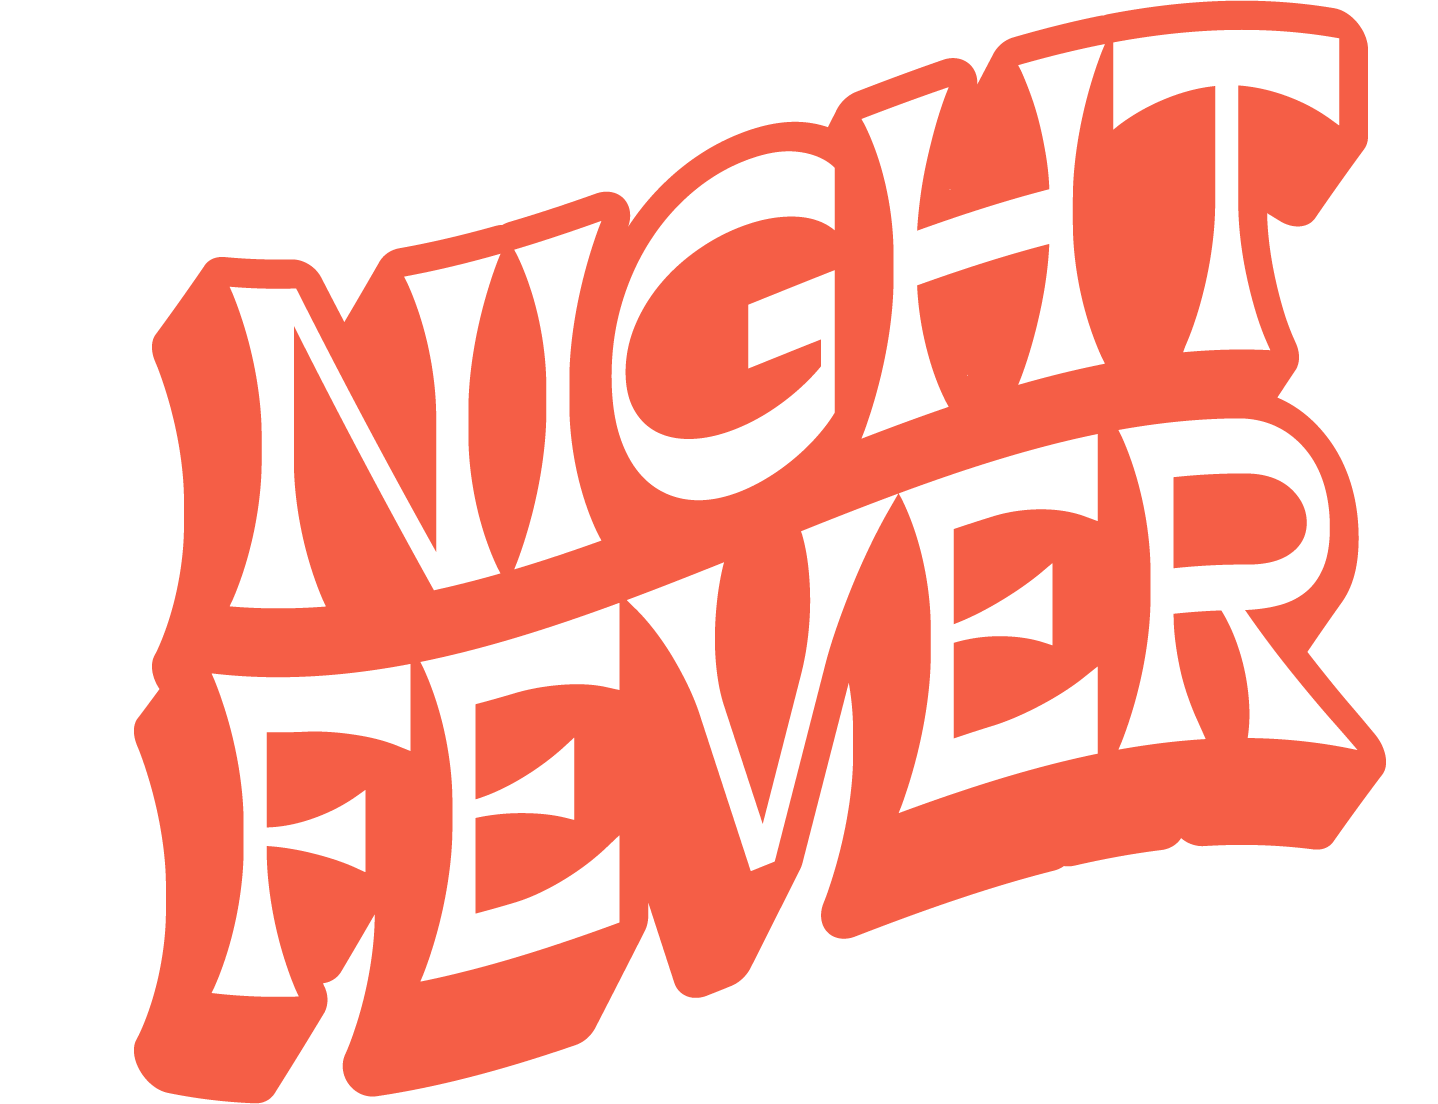 night fever